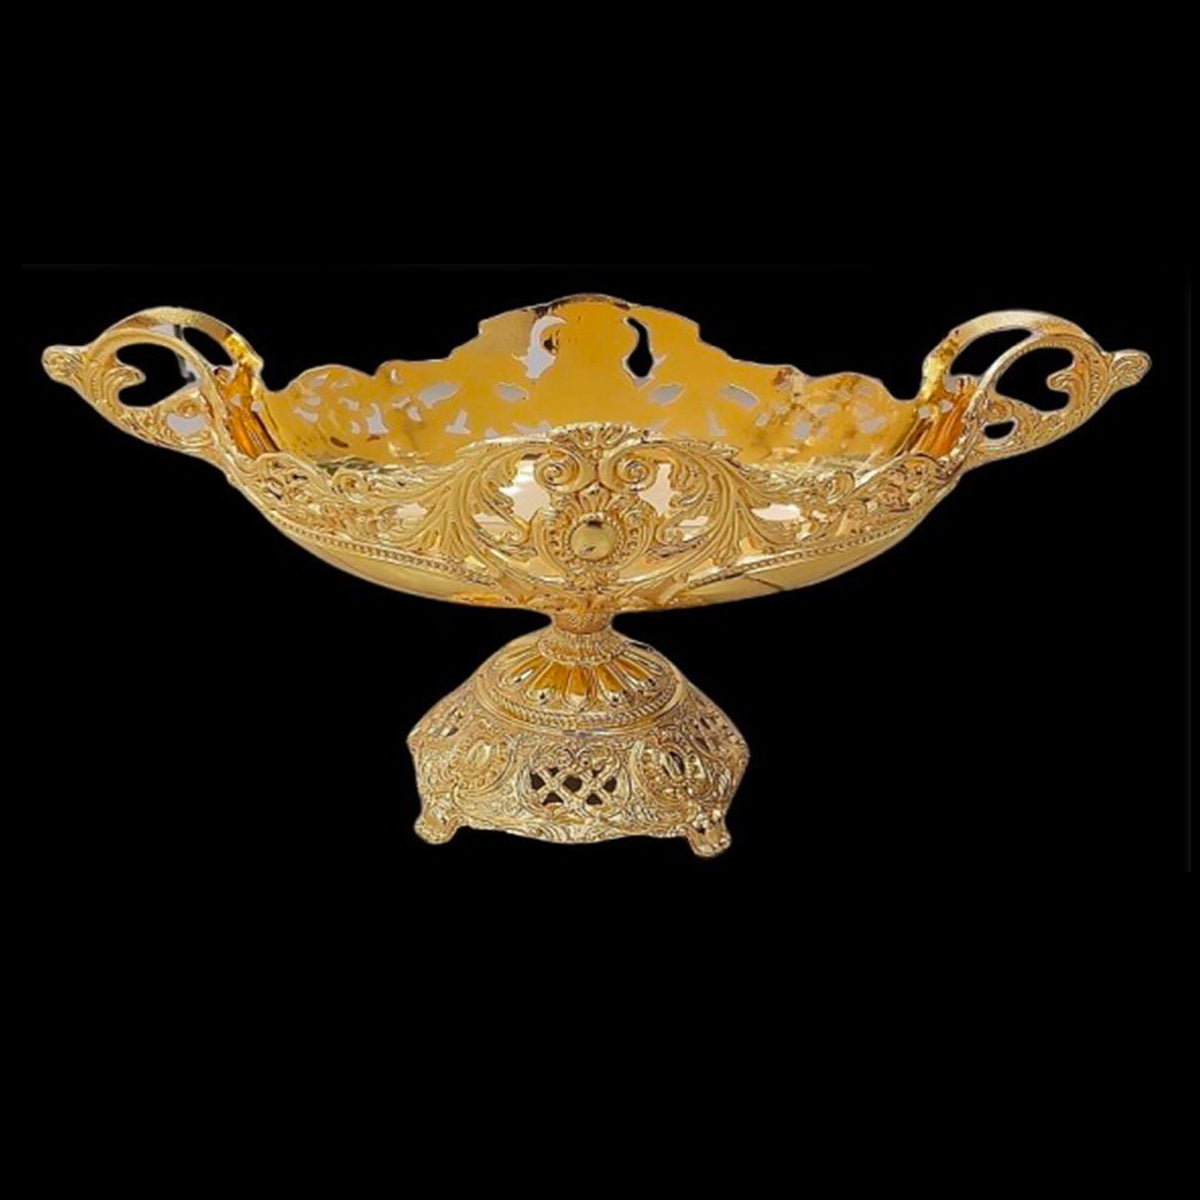 Goldene Pracht mit filigranem Charme: Die vergoldete mittelgrosse Gondol